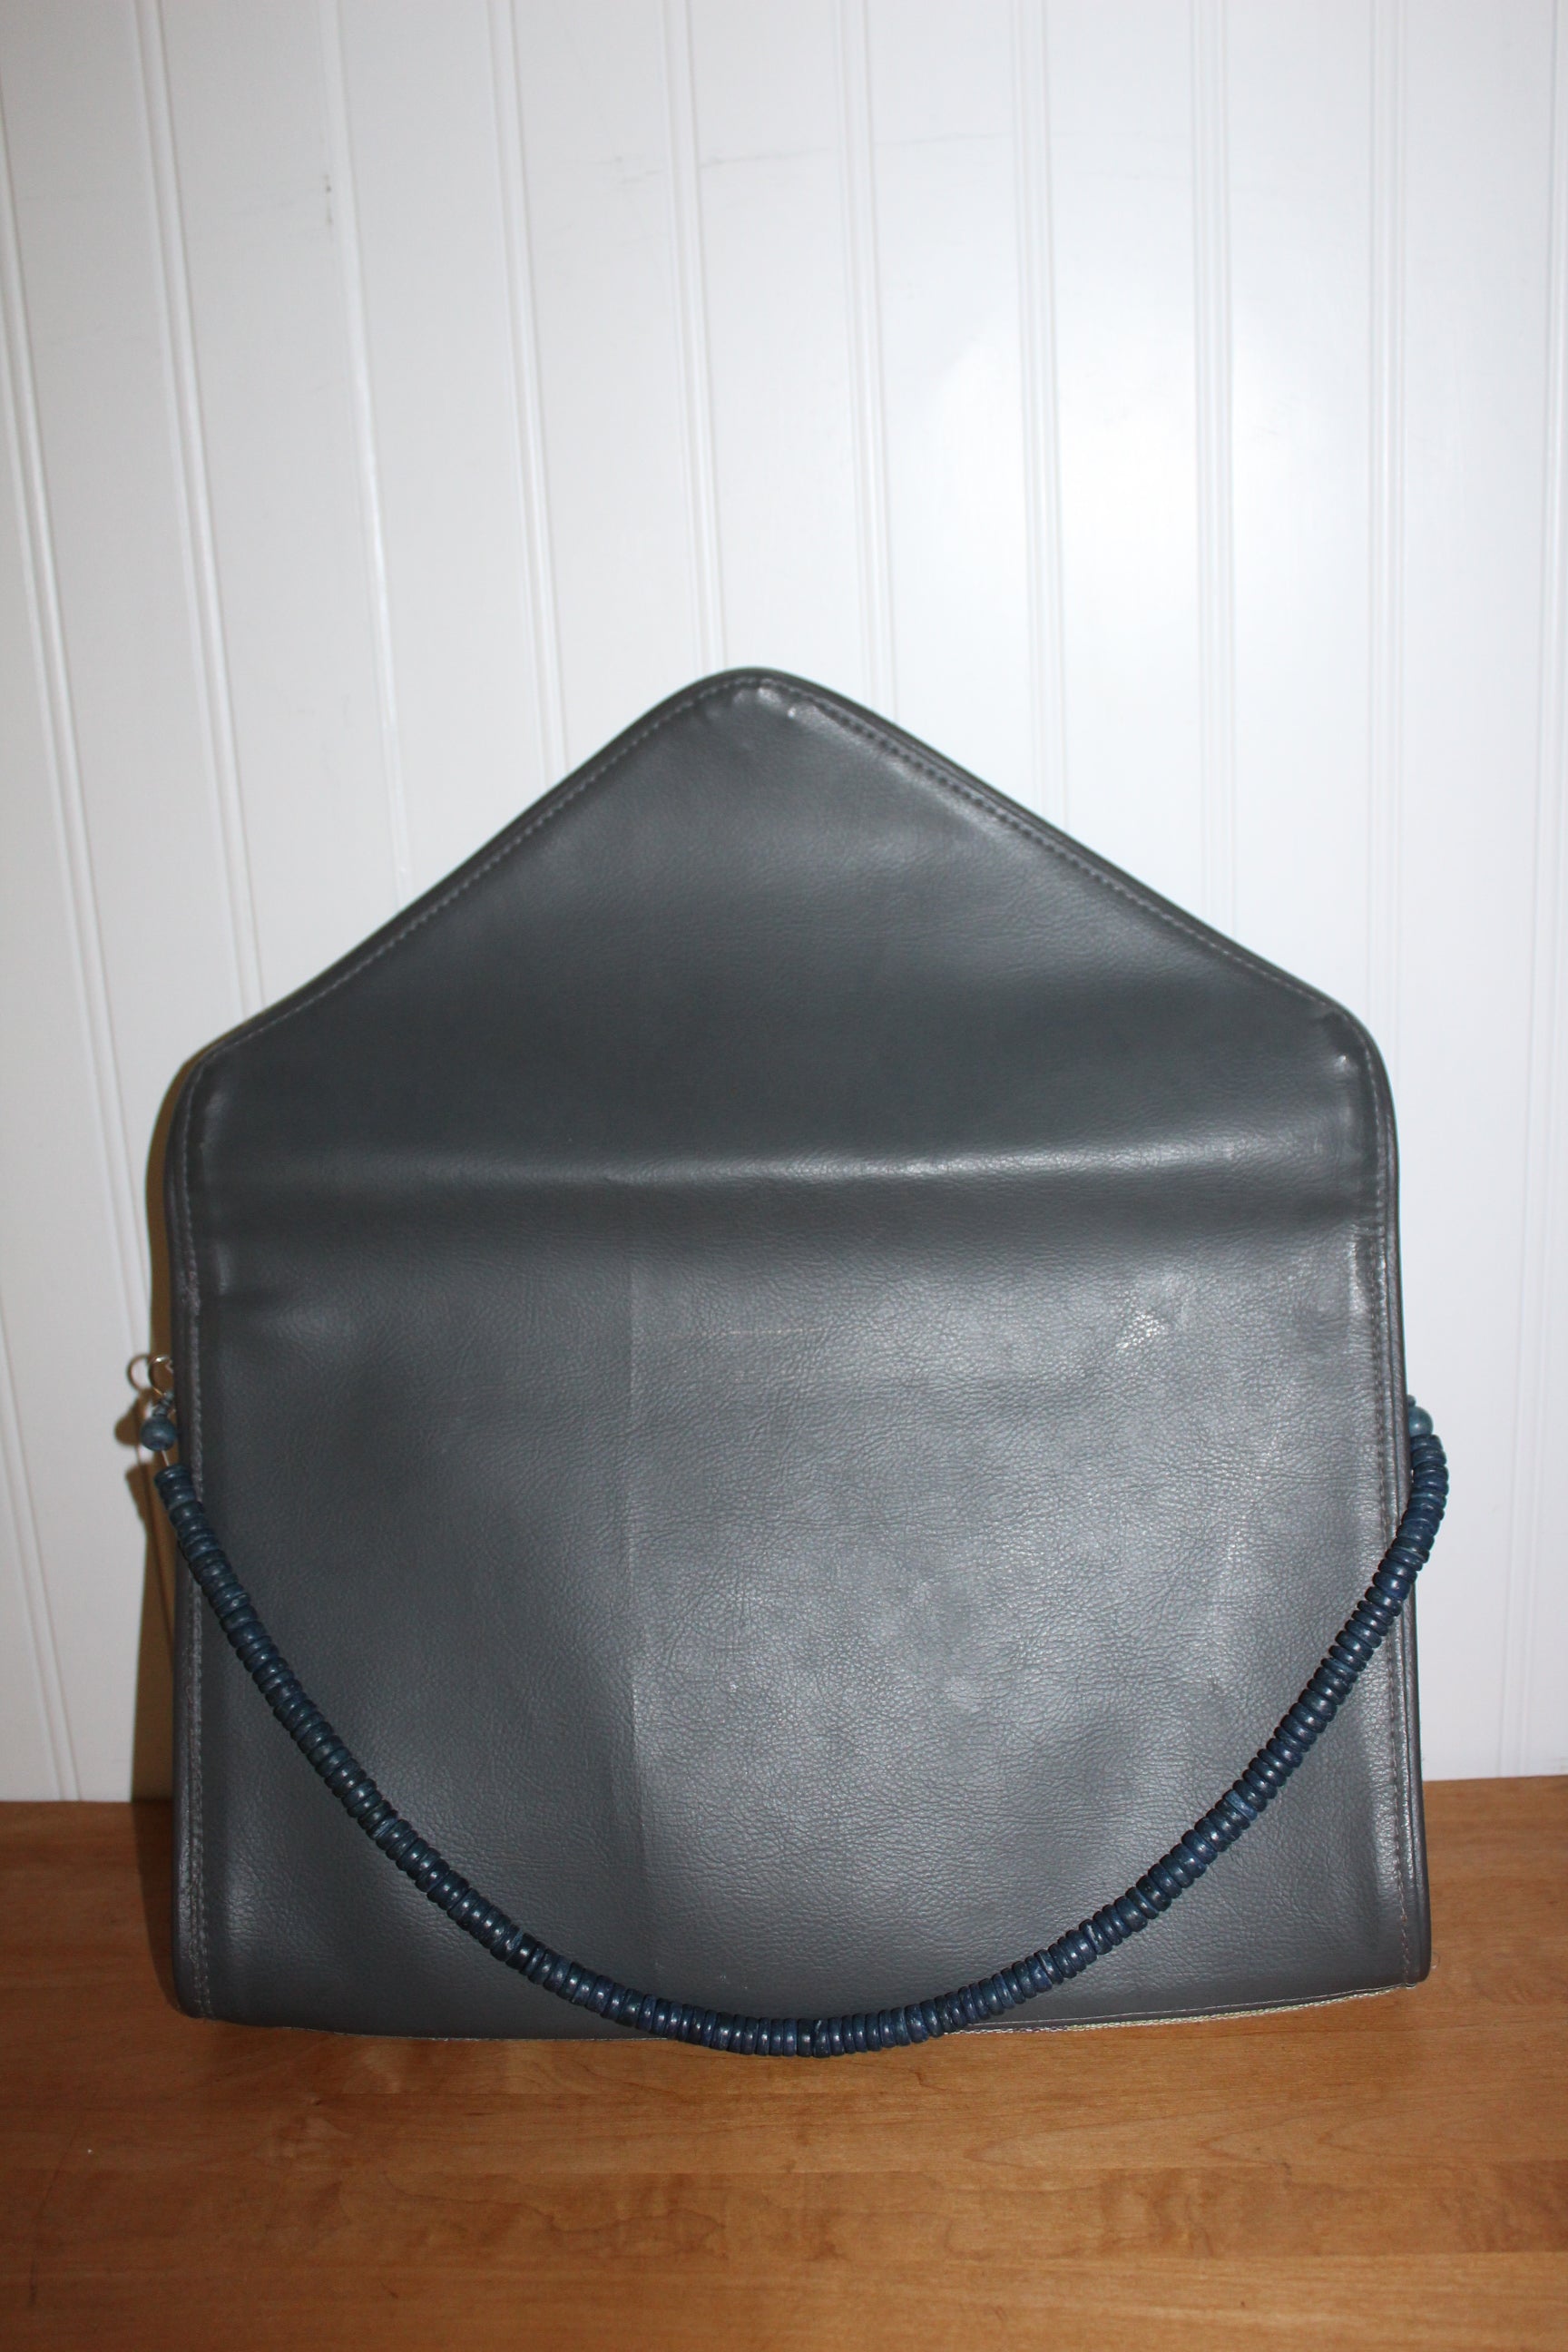 Unused Envelope Handbag - Heavy Woven Ombre Fabric Smoke Blues Purples Beige removable strap